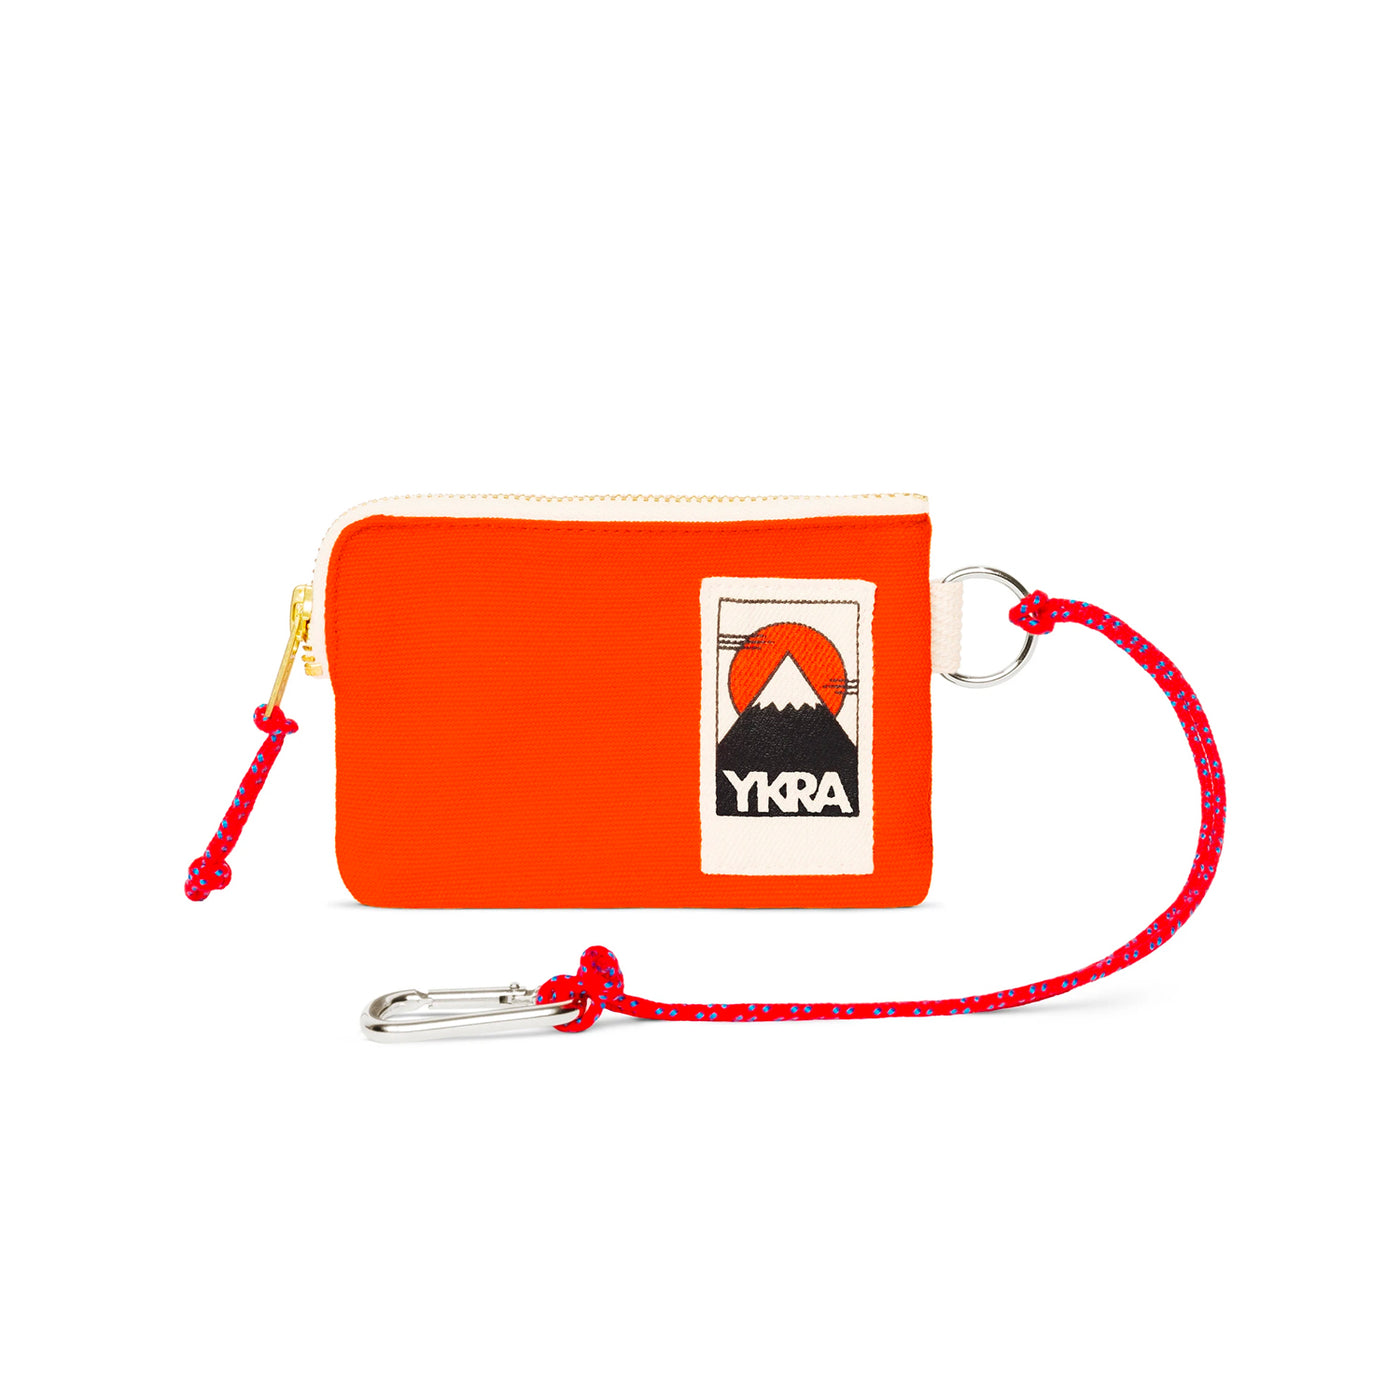 ykra mini wallet - orange